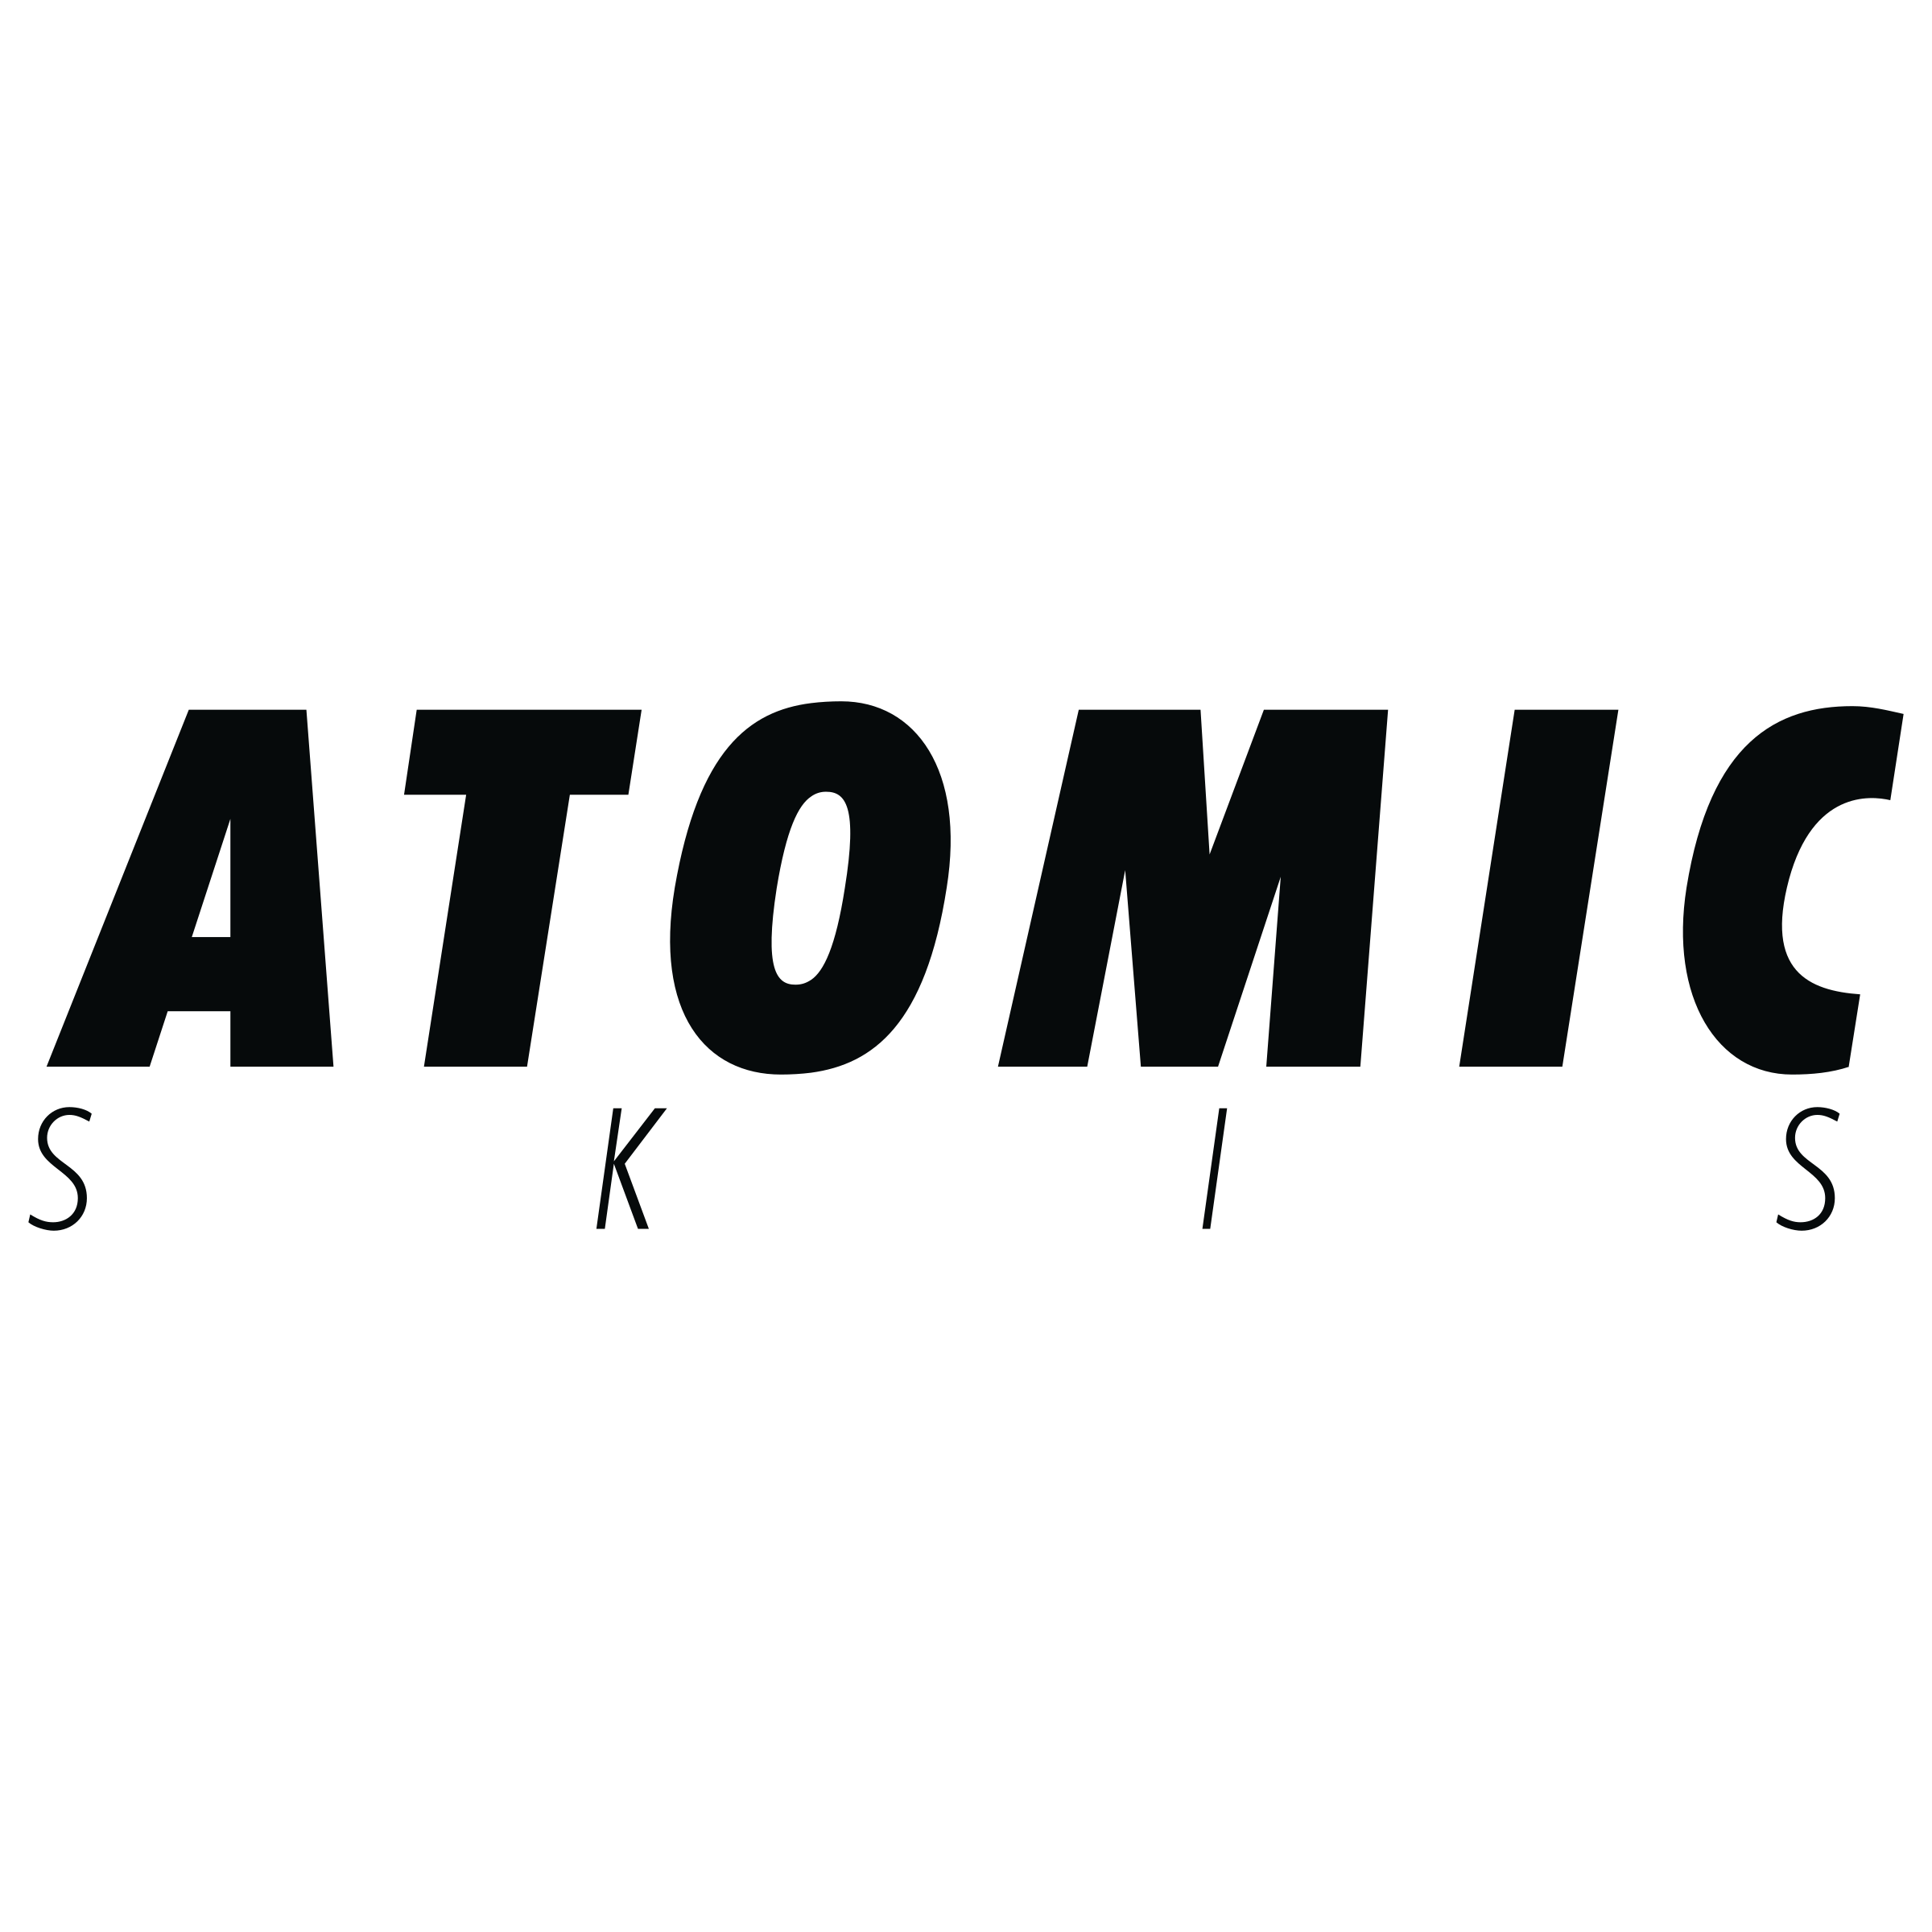 Atomic Logo Vectors Free Down